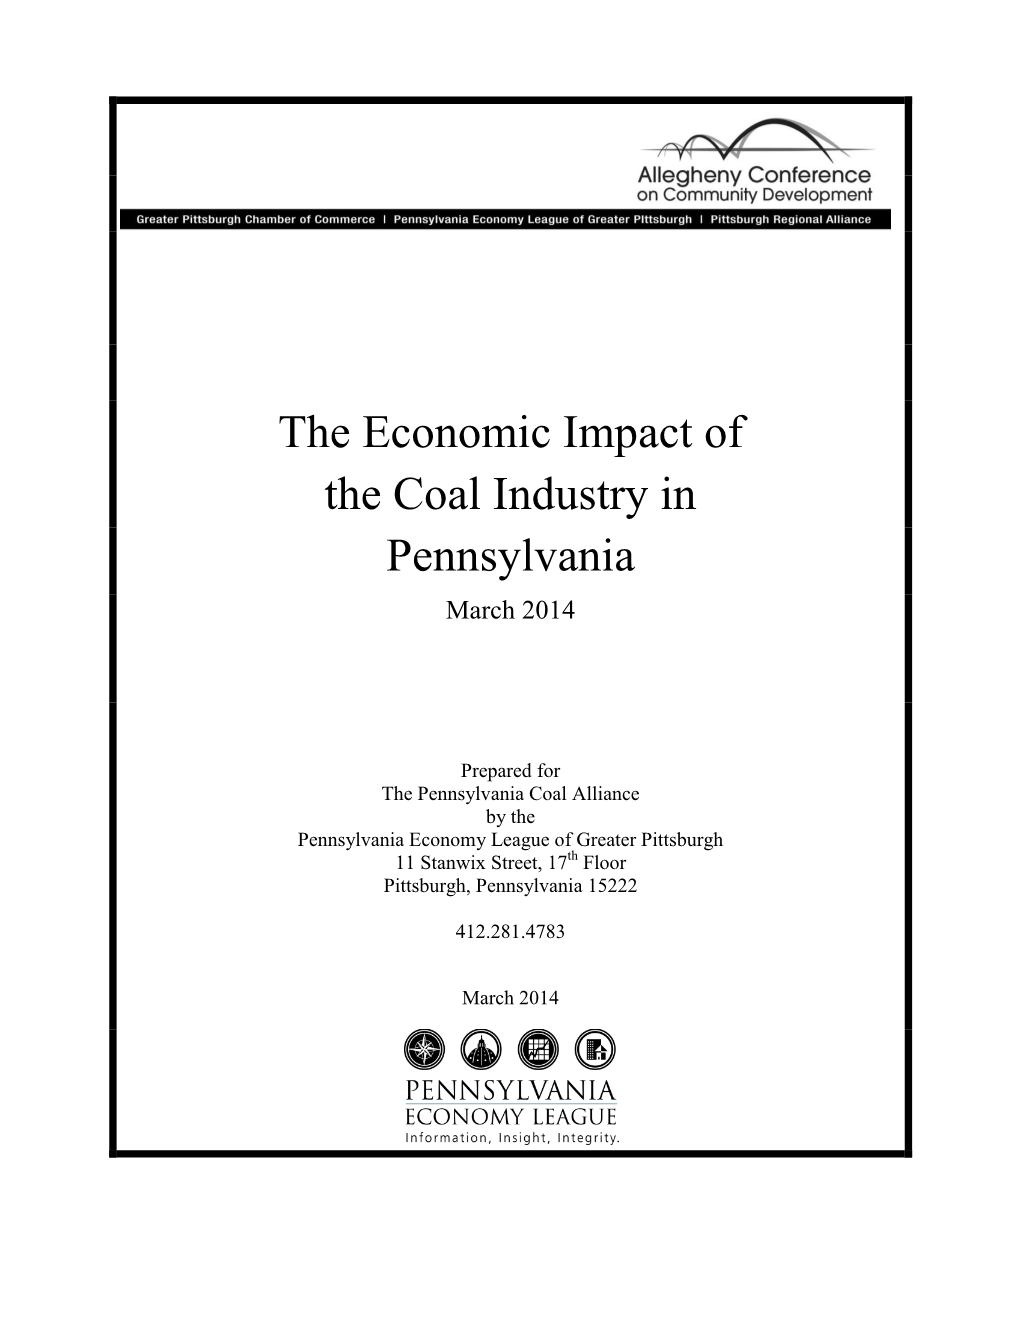 The Economic Impact of the Coal Industry in Pennsylvania